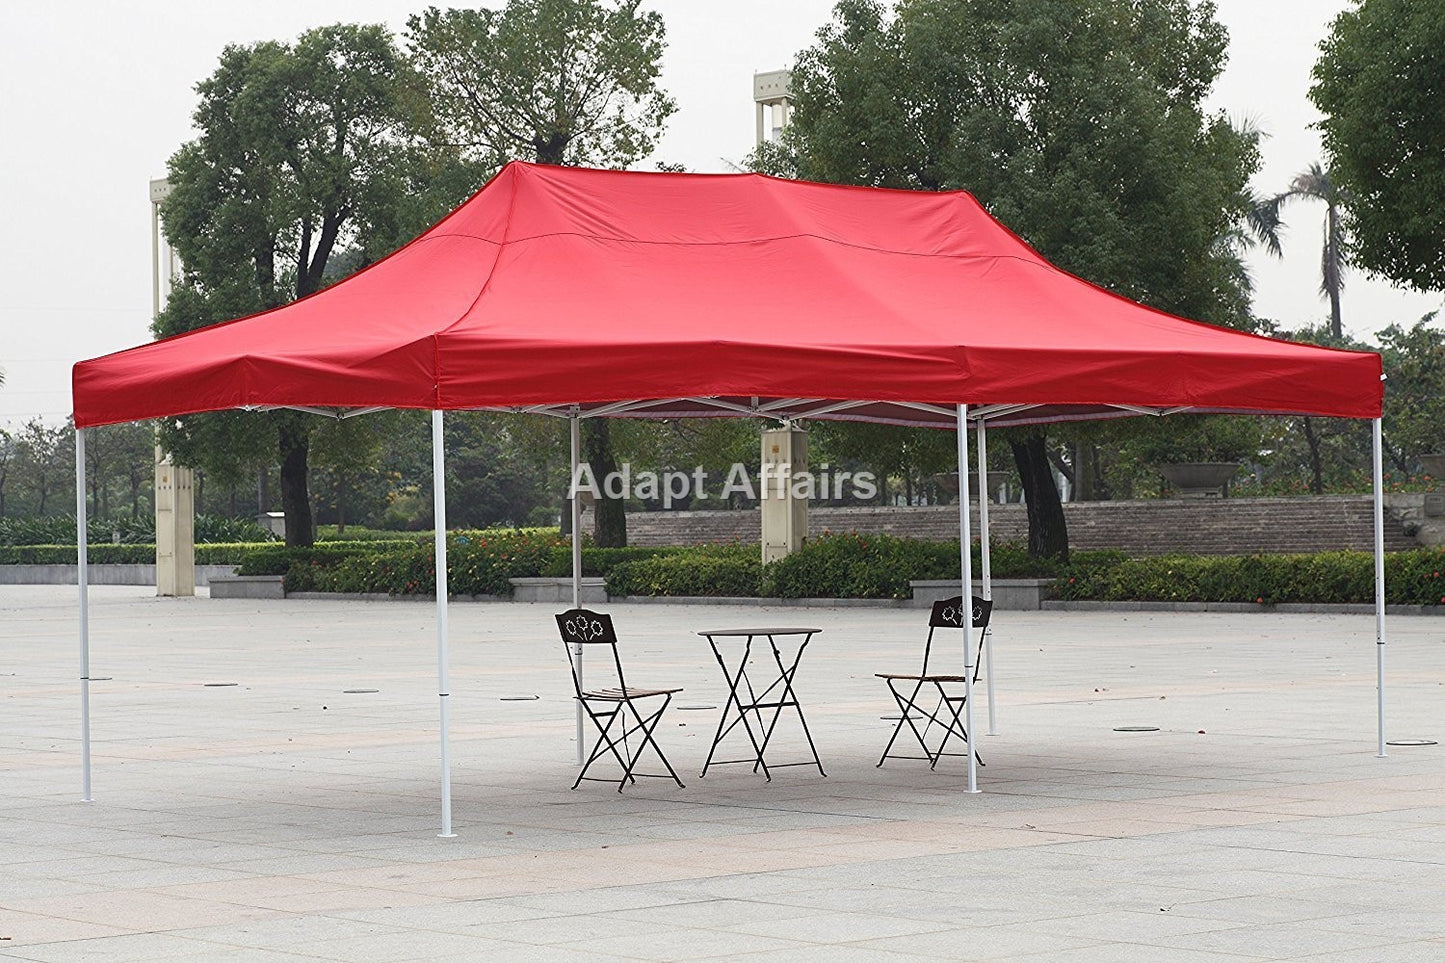 Canopy Tent - 10 x 20 Feet Semi Premium Quality